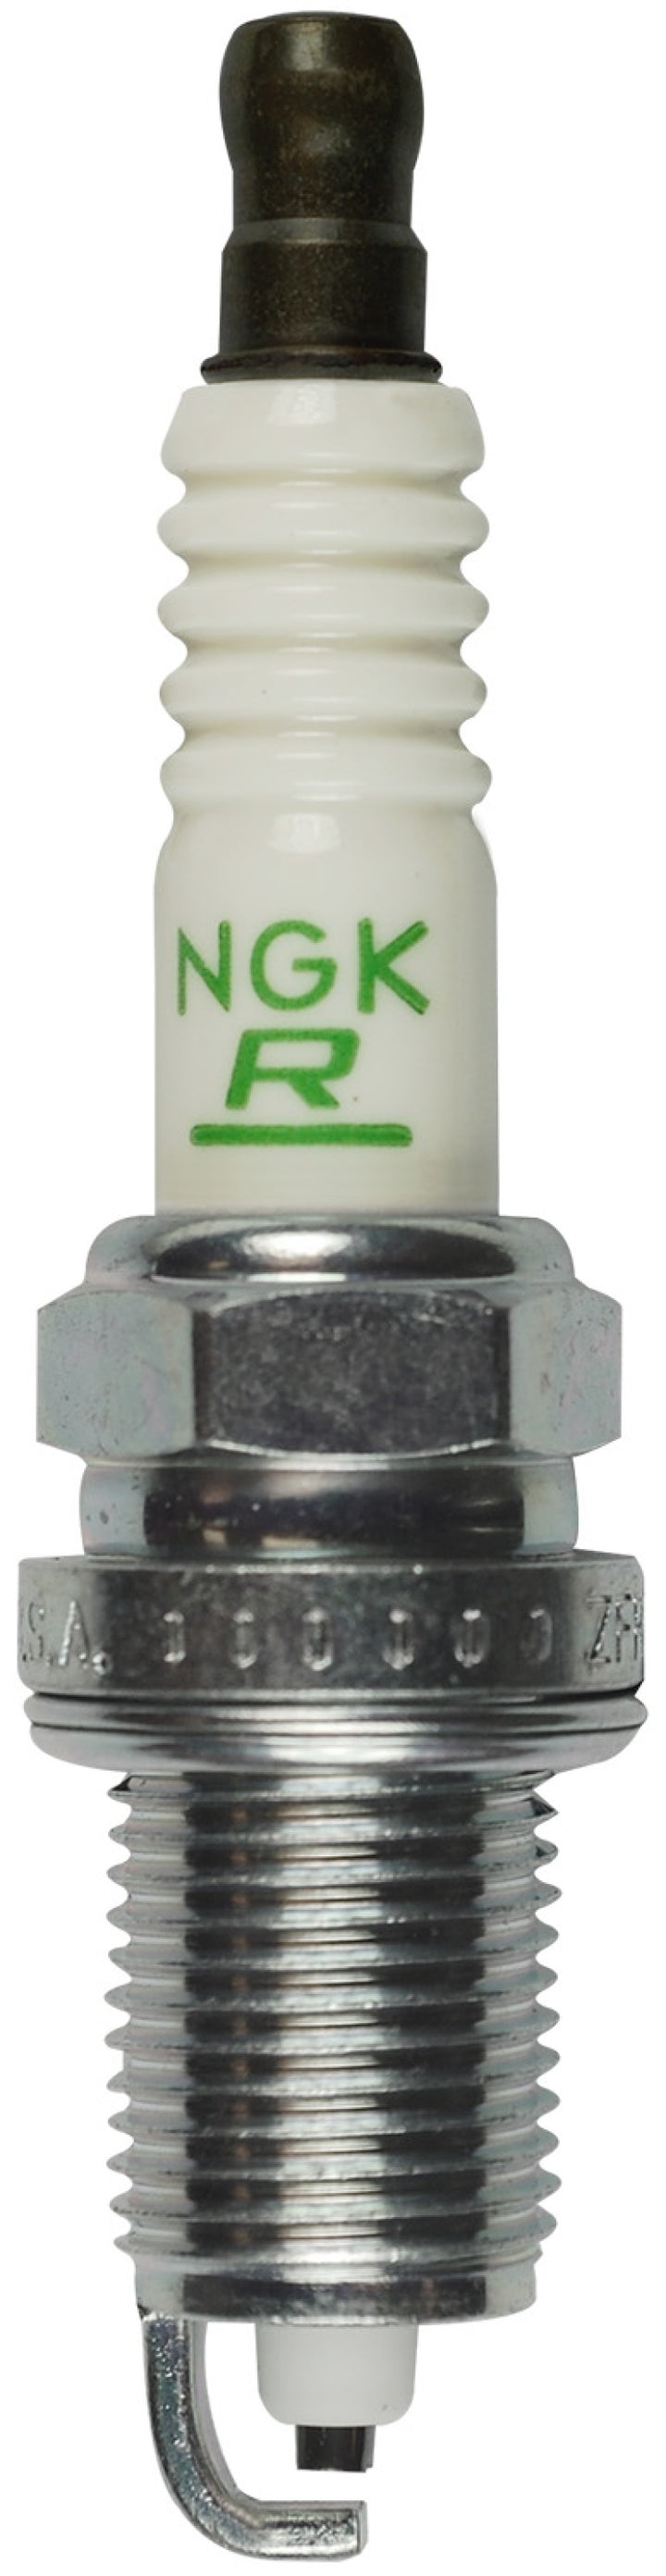 NGK V-Power Spark Plug Box of 4 (ZFR6F-11).